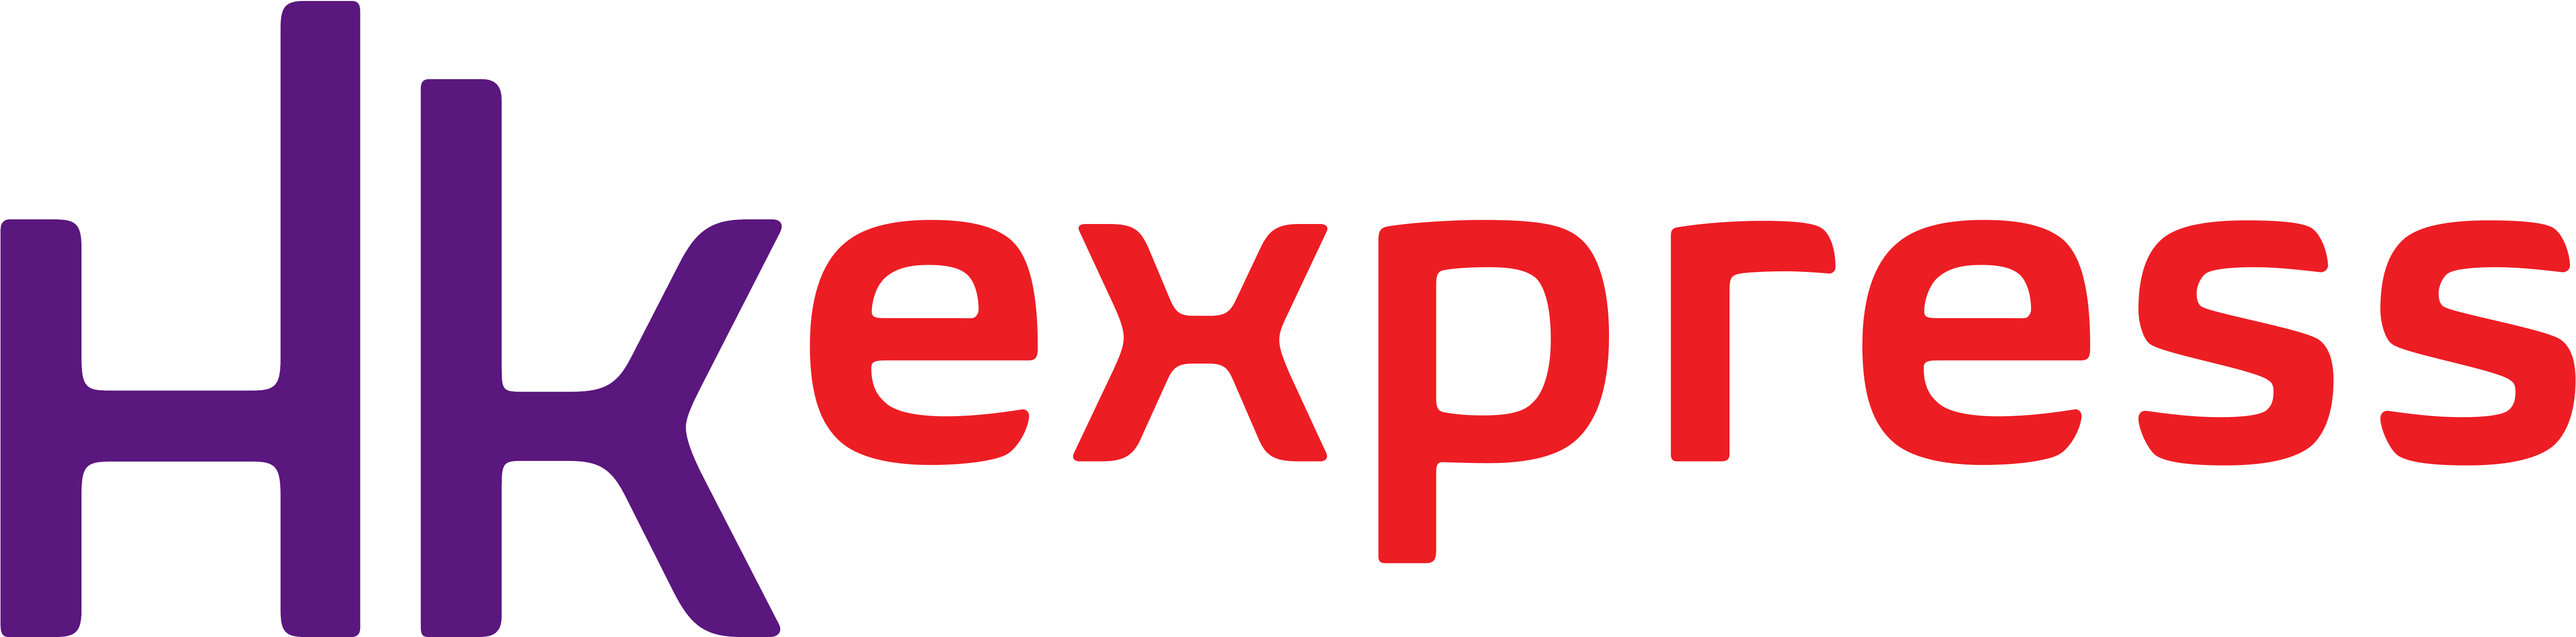 Hk Express Logo, Logotype (Hong Kong Express Airways) - Hong Kong Airlines, Transparent background PNG HD thumbnail